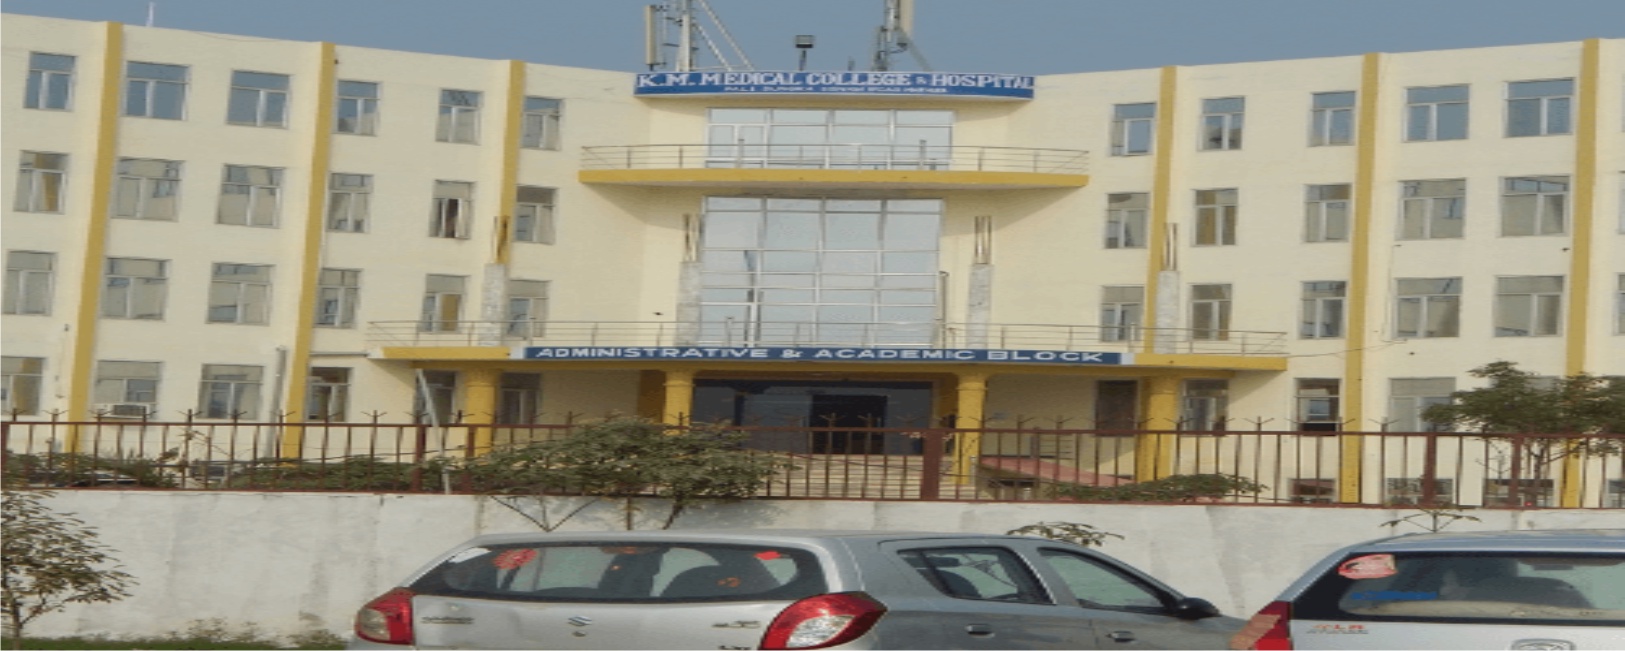 K M Medical College & Hospital, Mathura